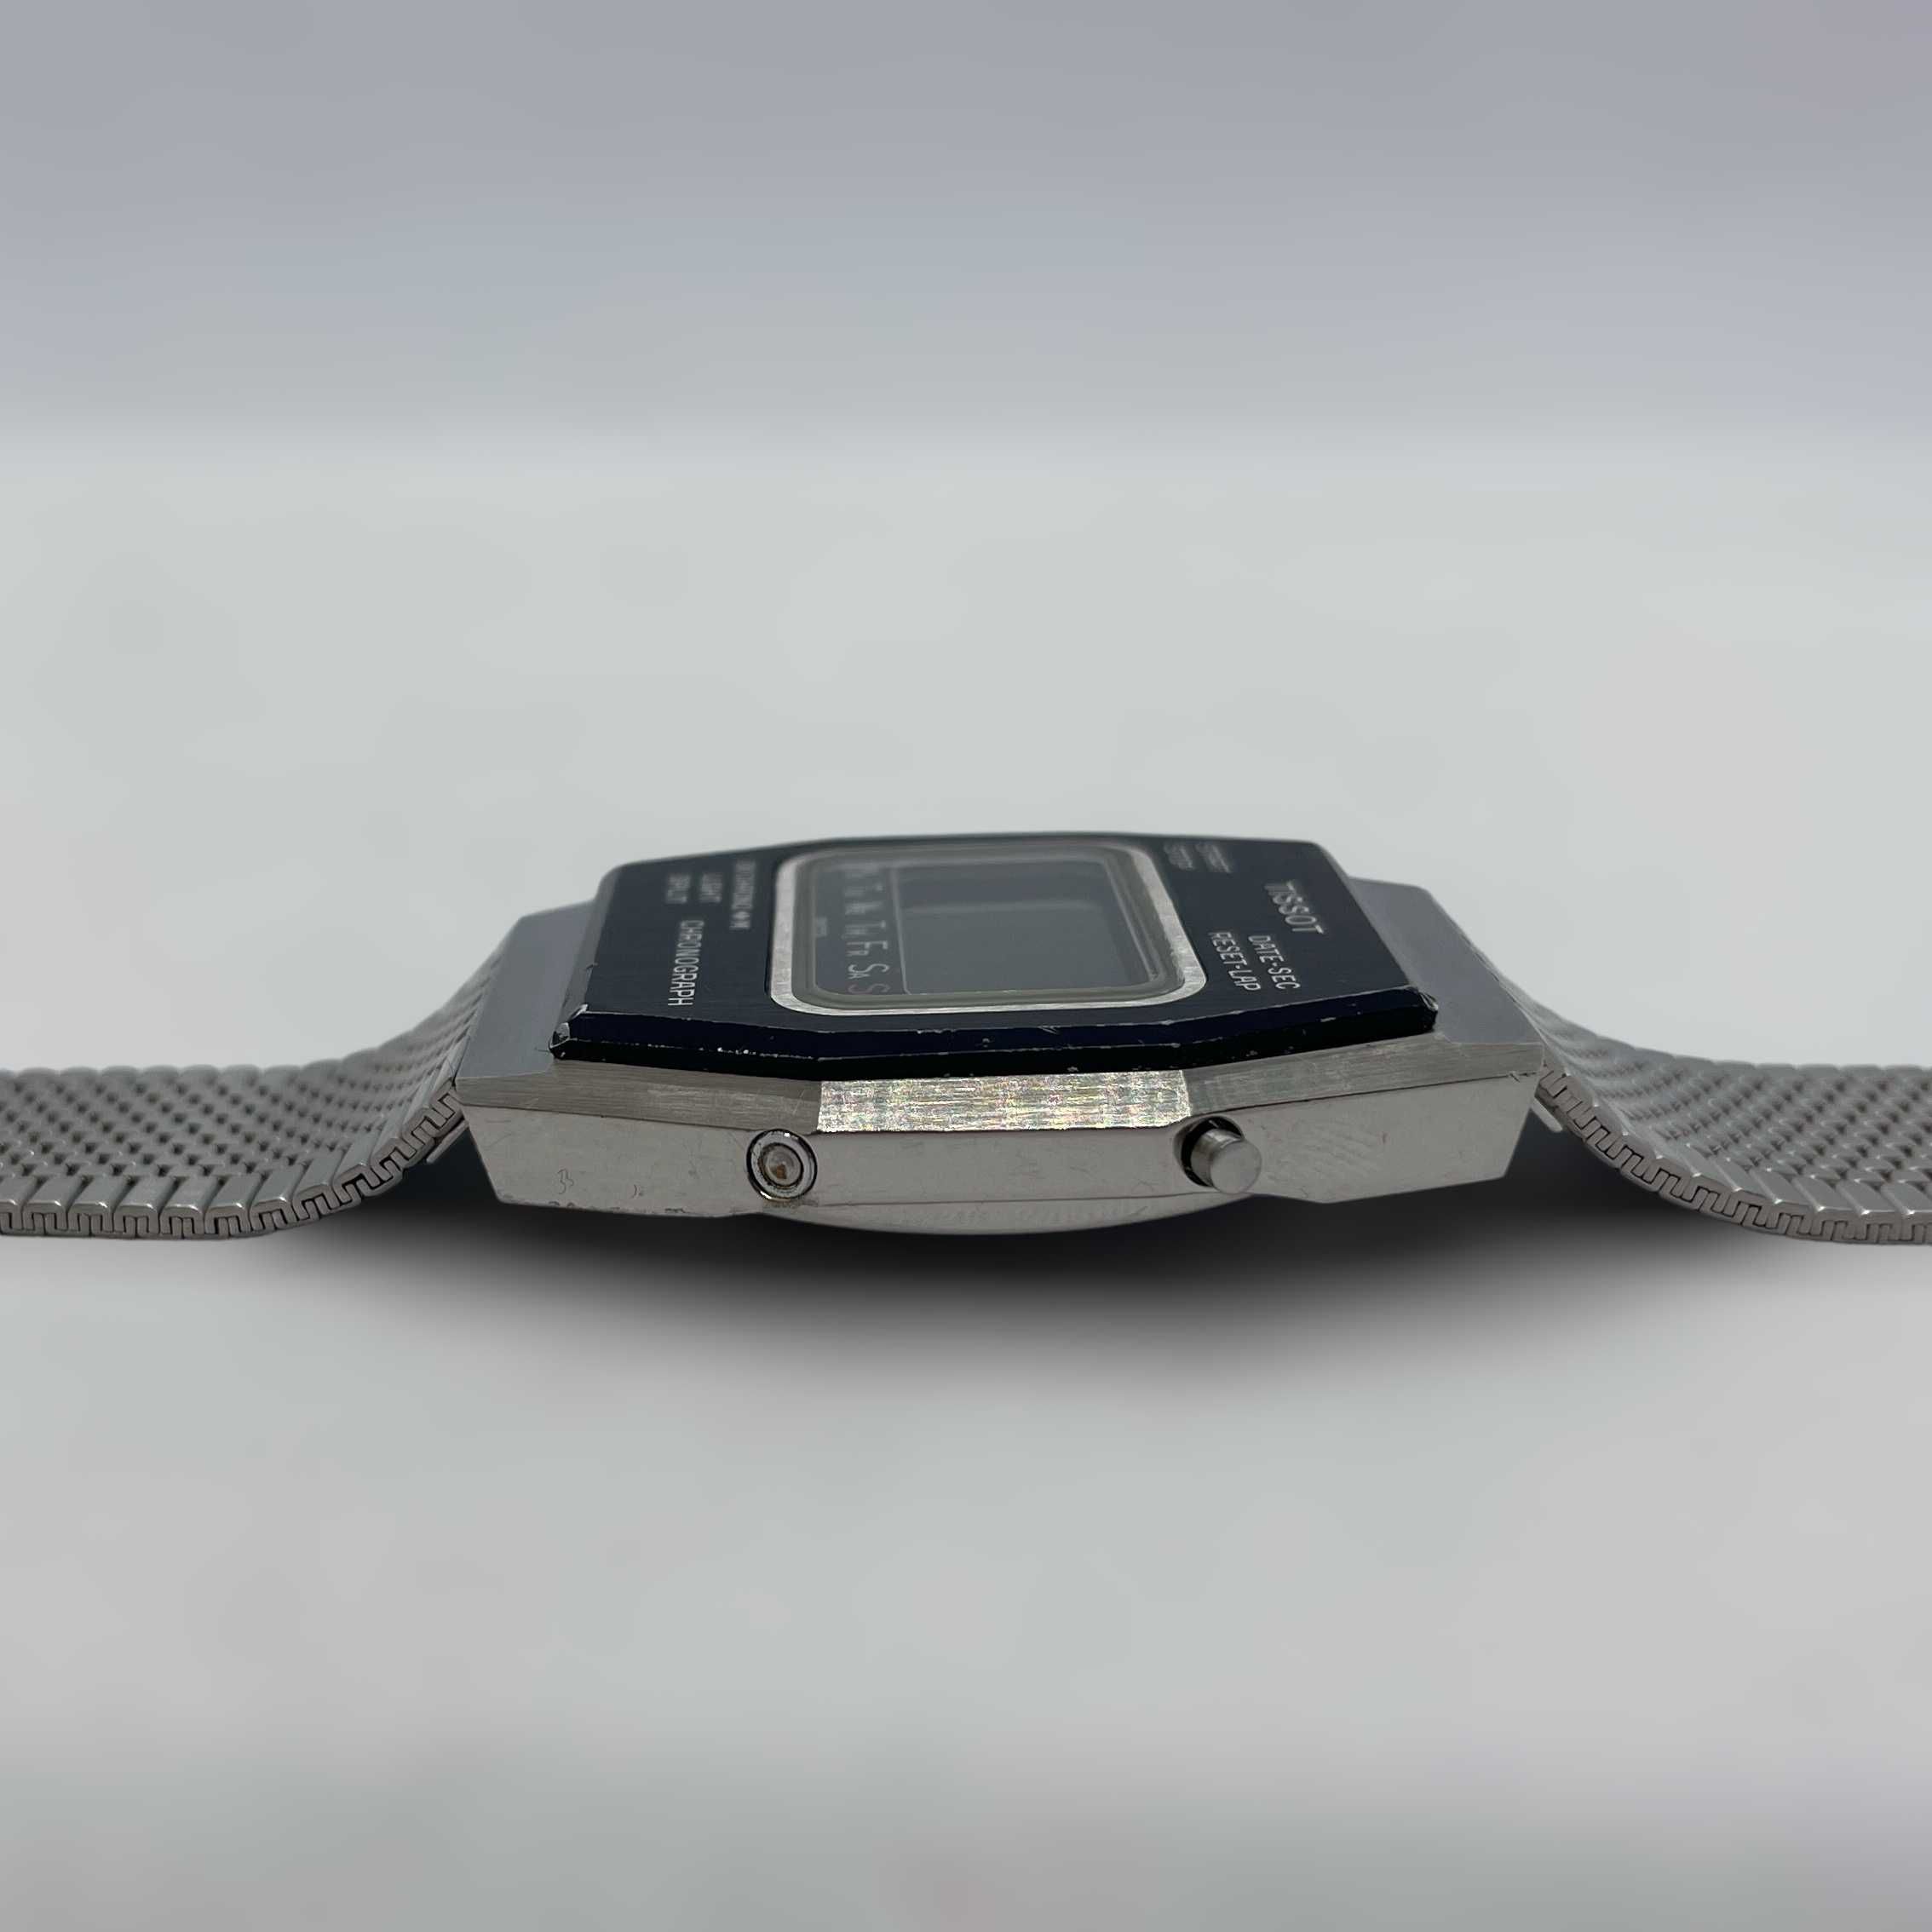 Мъжки часовник Tissot LCD Digital Double Chronograph